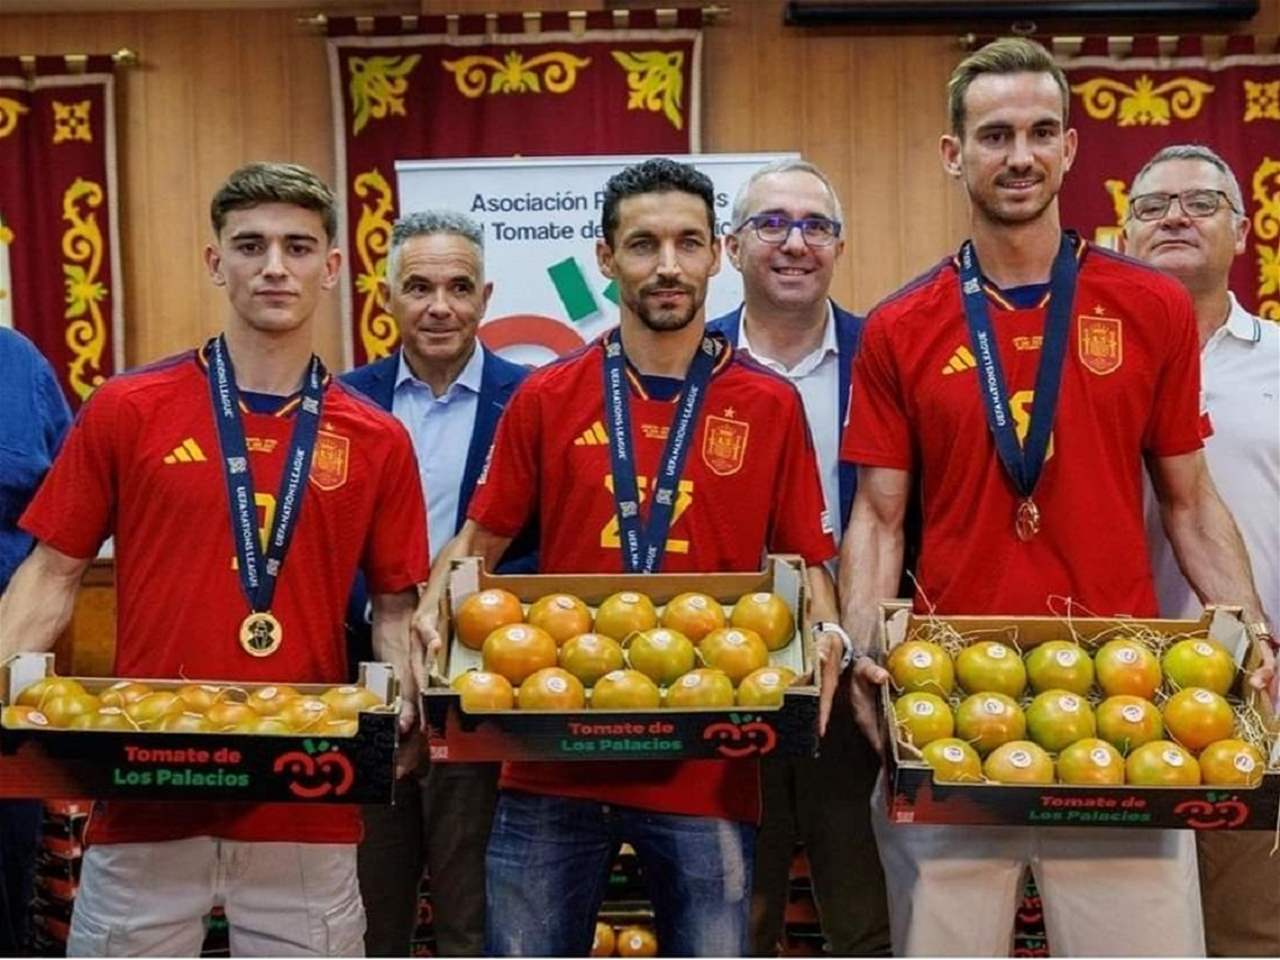 &quot;وزنك طماطم&quot; هدية لنجوم منتخب اسبانيا نظير اللقب الاوروبي !!